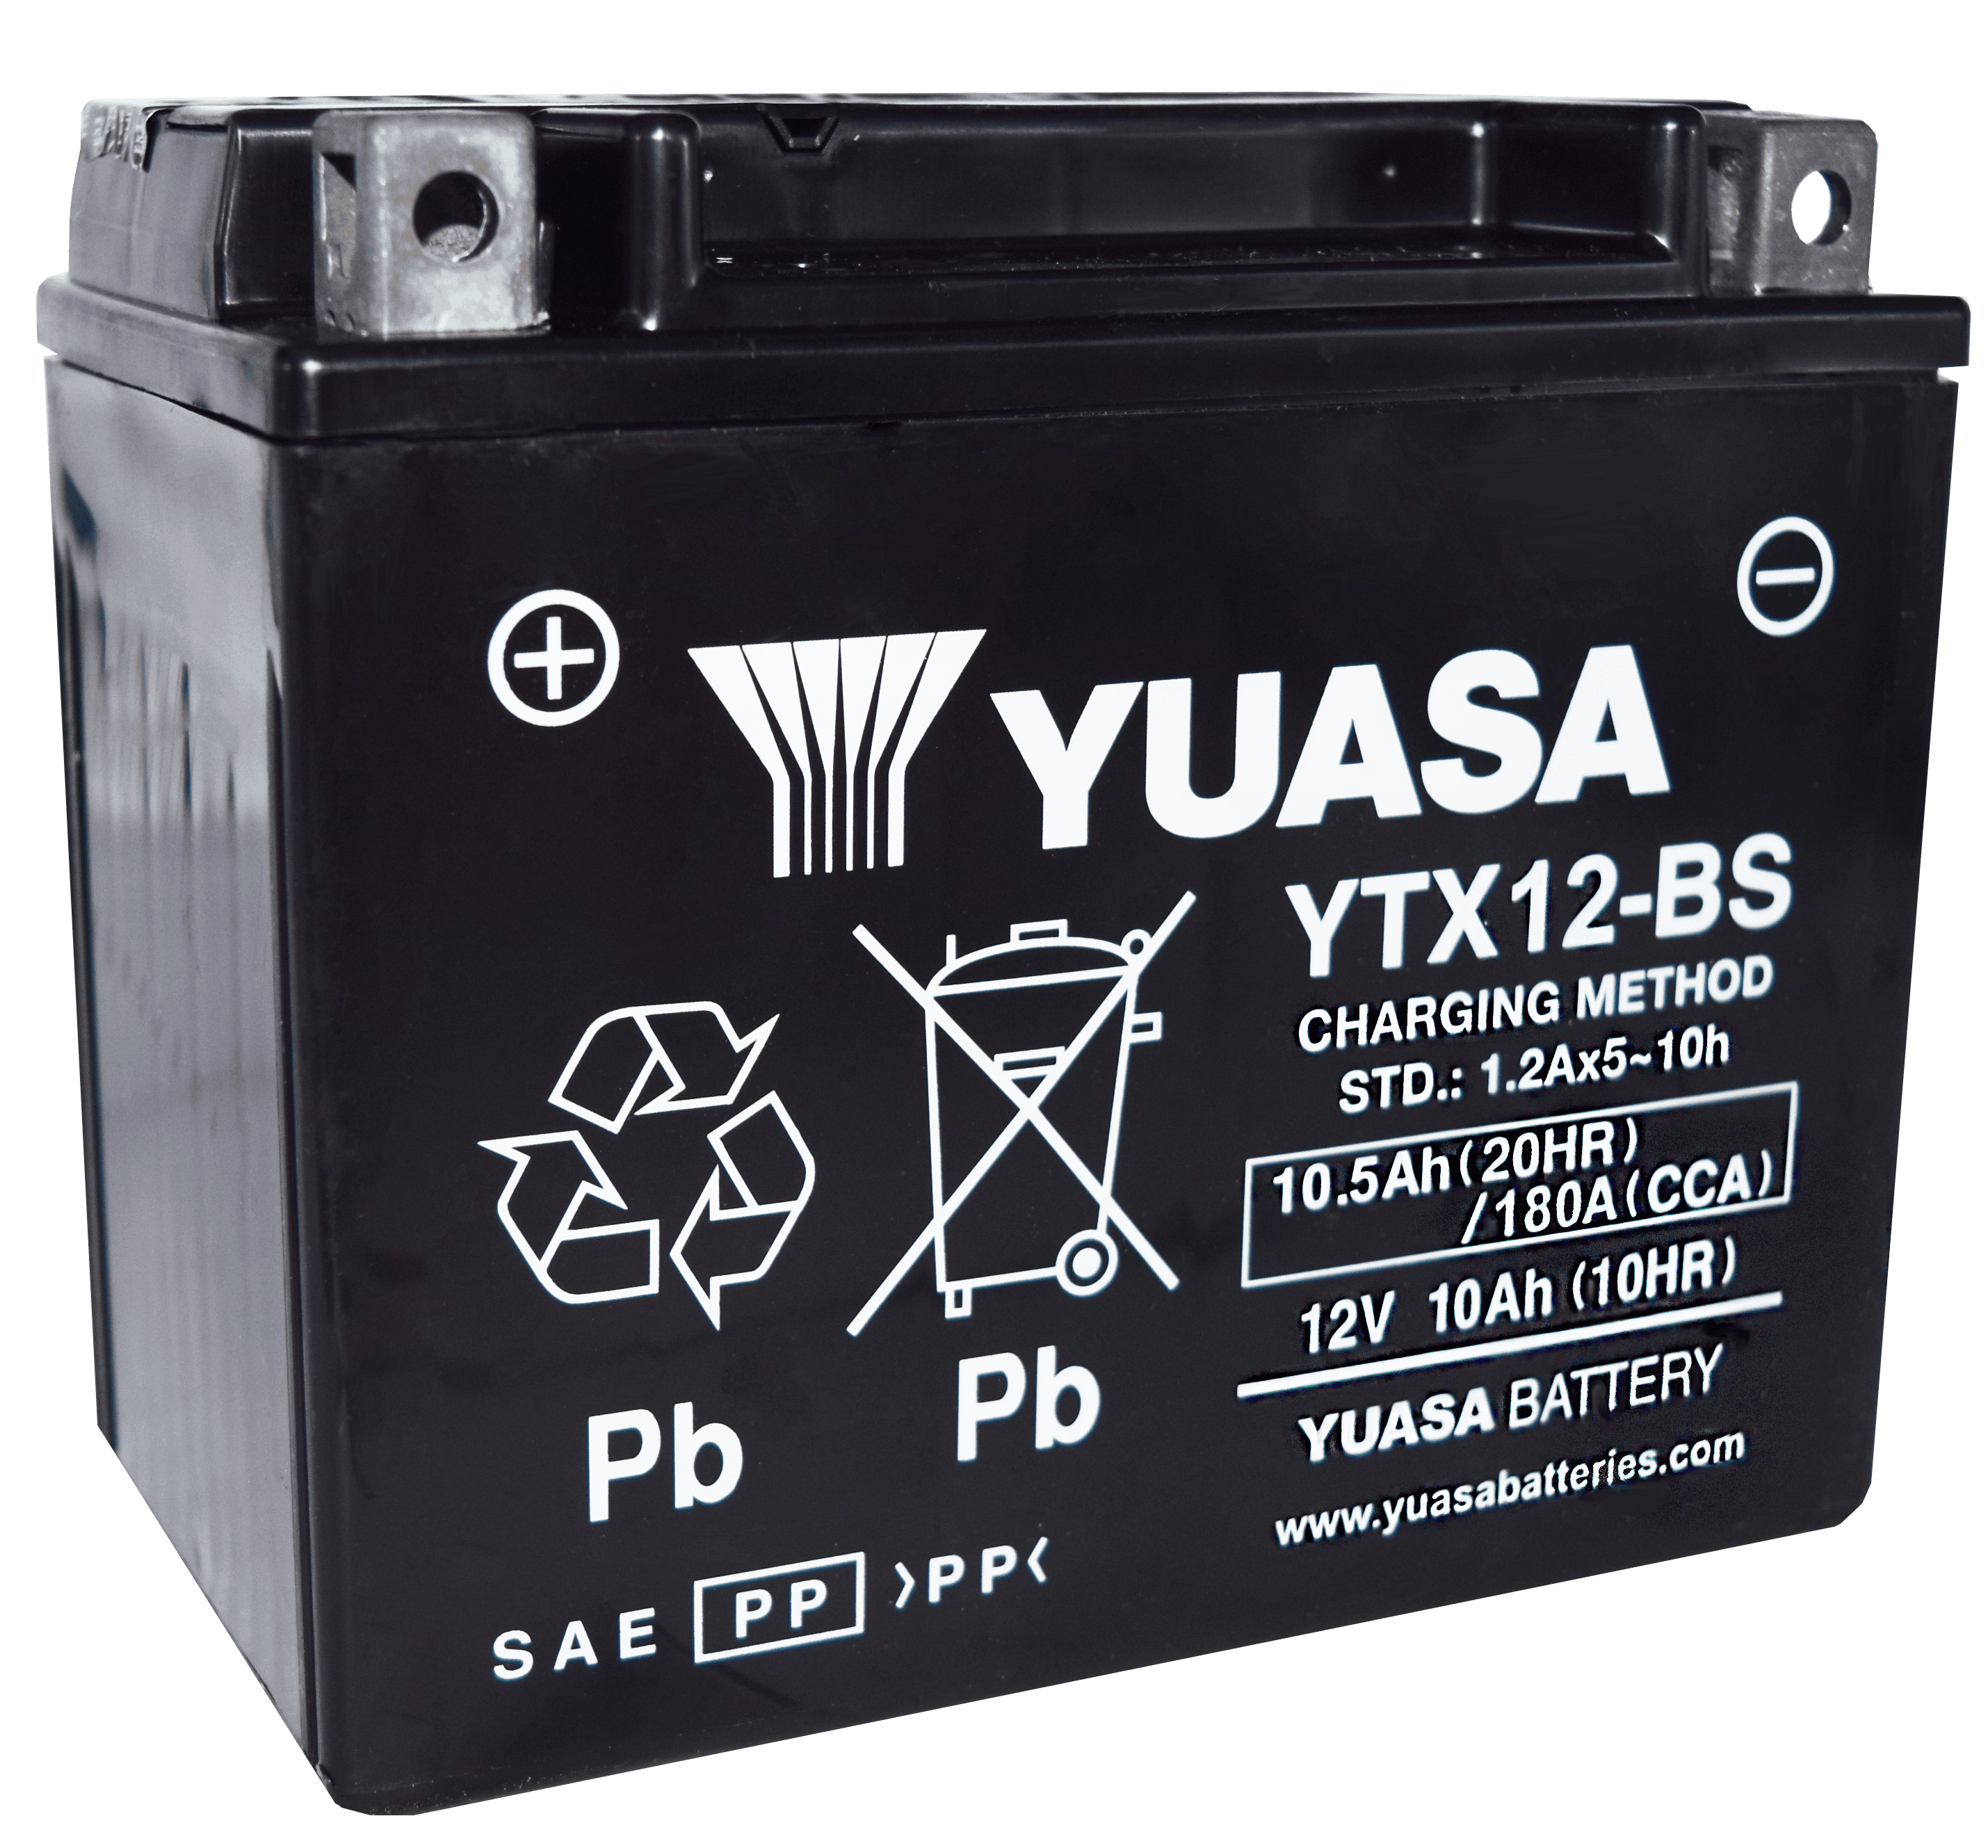 Batterie YTX14AH-BS 12V 12Ah gel Kyoto Quad, Moto - BatteriePower